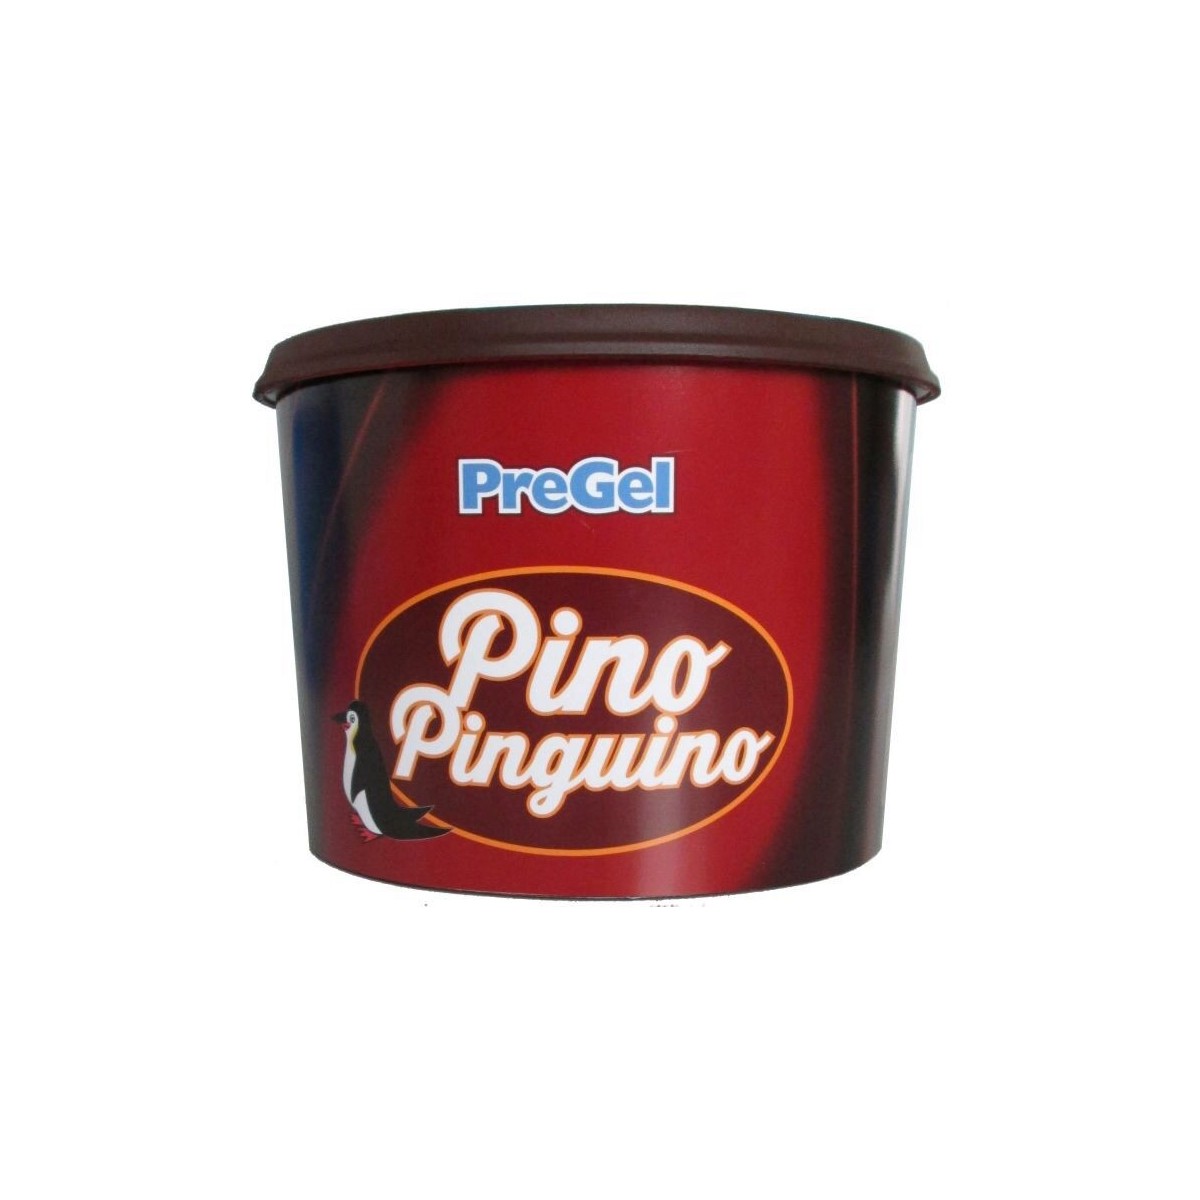 PREGEL PINOPINGUINO SAUCE CHOCOLAT & NOISETTES 2,5KG